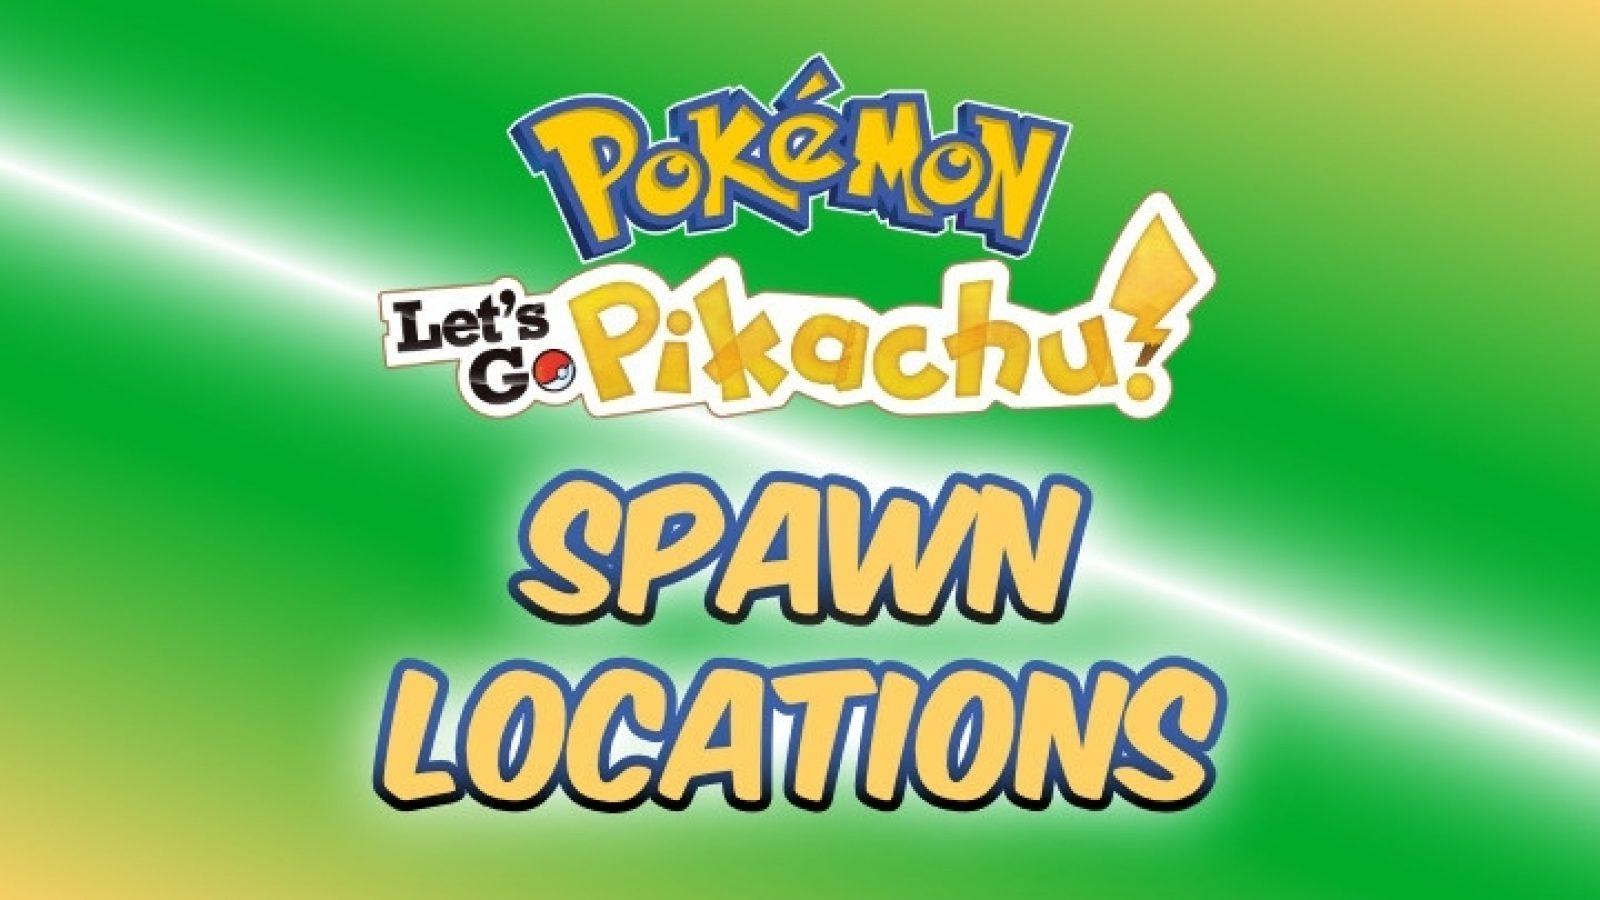 HOW TO GET Farfetch'd in Pokémon Let's Go Pikachu & Eevee 